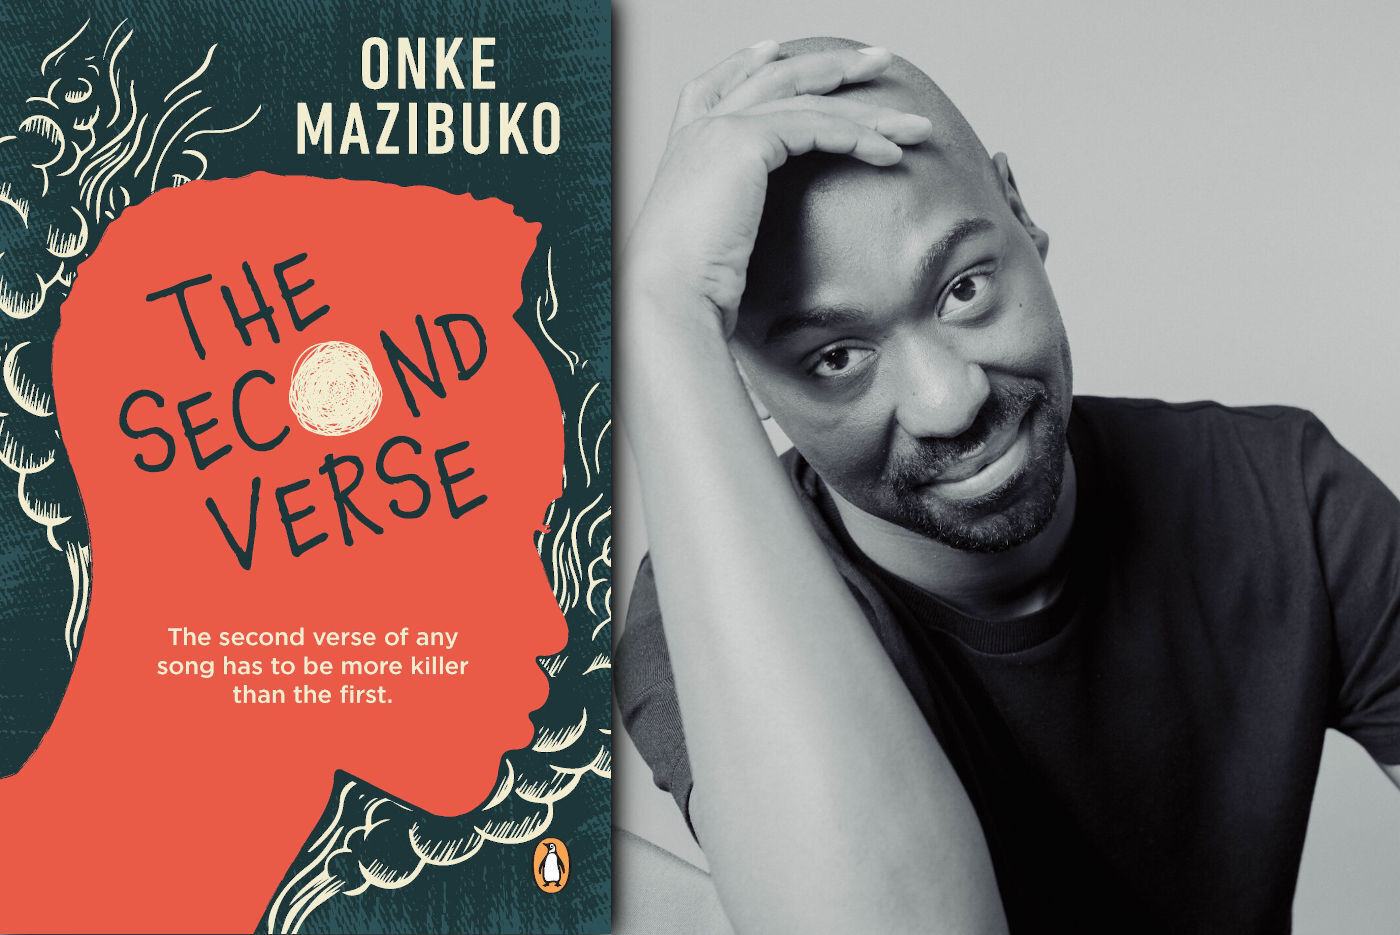 'The Second Verse' by Onke Mazibuko